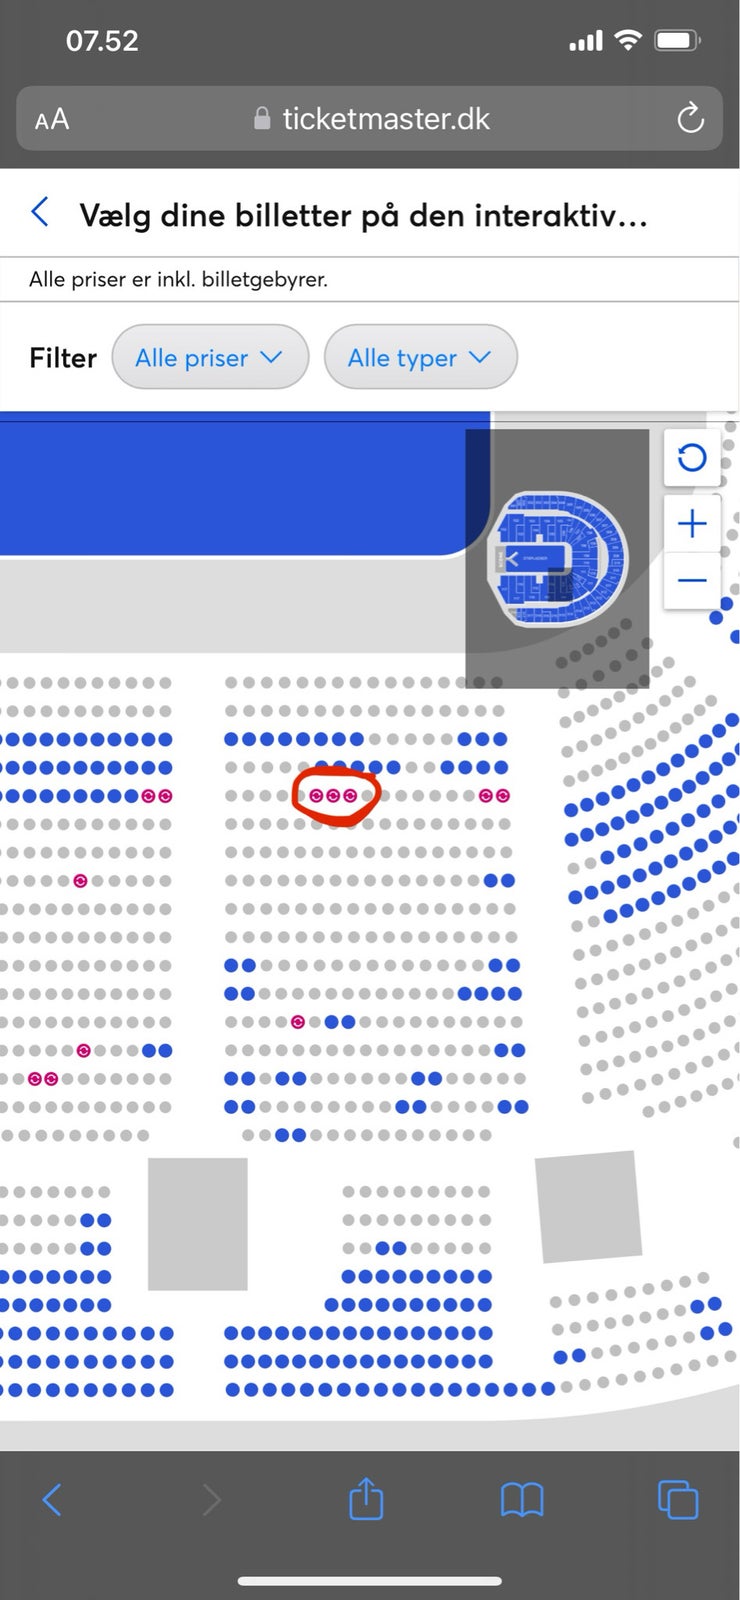 Jonas Brothers - PL1 siddepladser, Koncert, Royal Arena